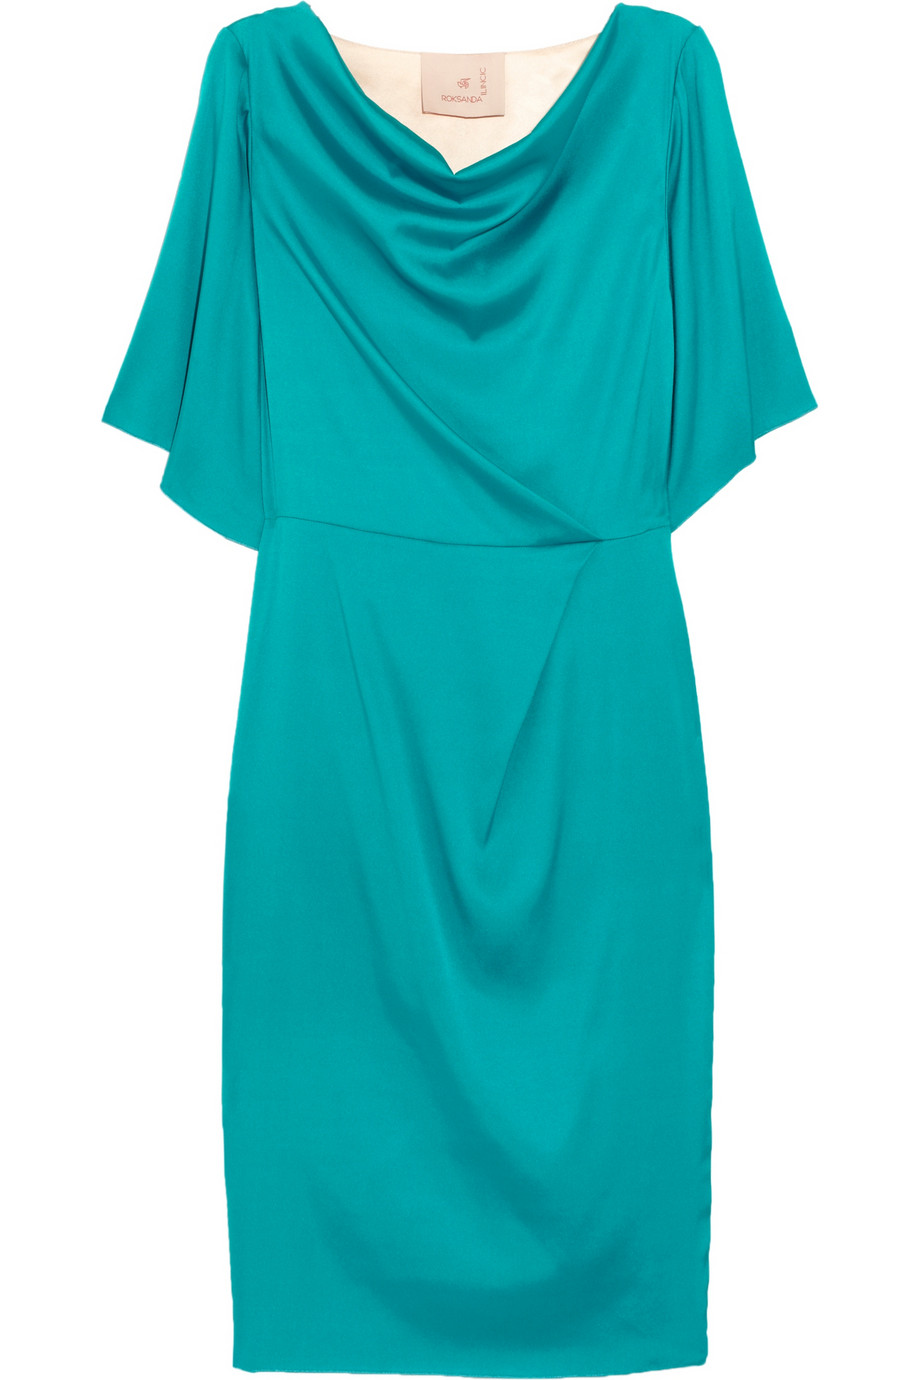 Roksanda Ilincic Asuna Stretchsilk Dress in Blue (teal) | Lyst